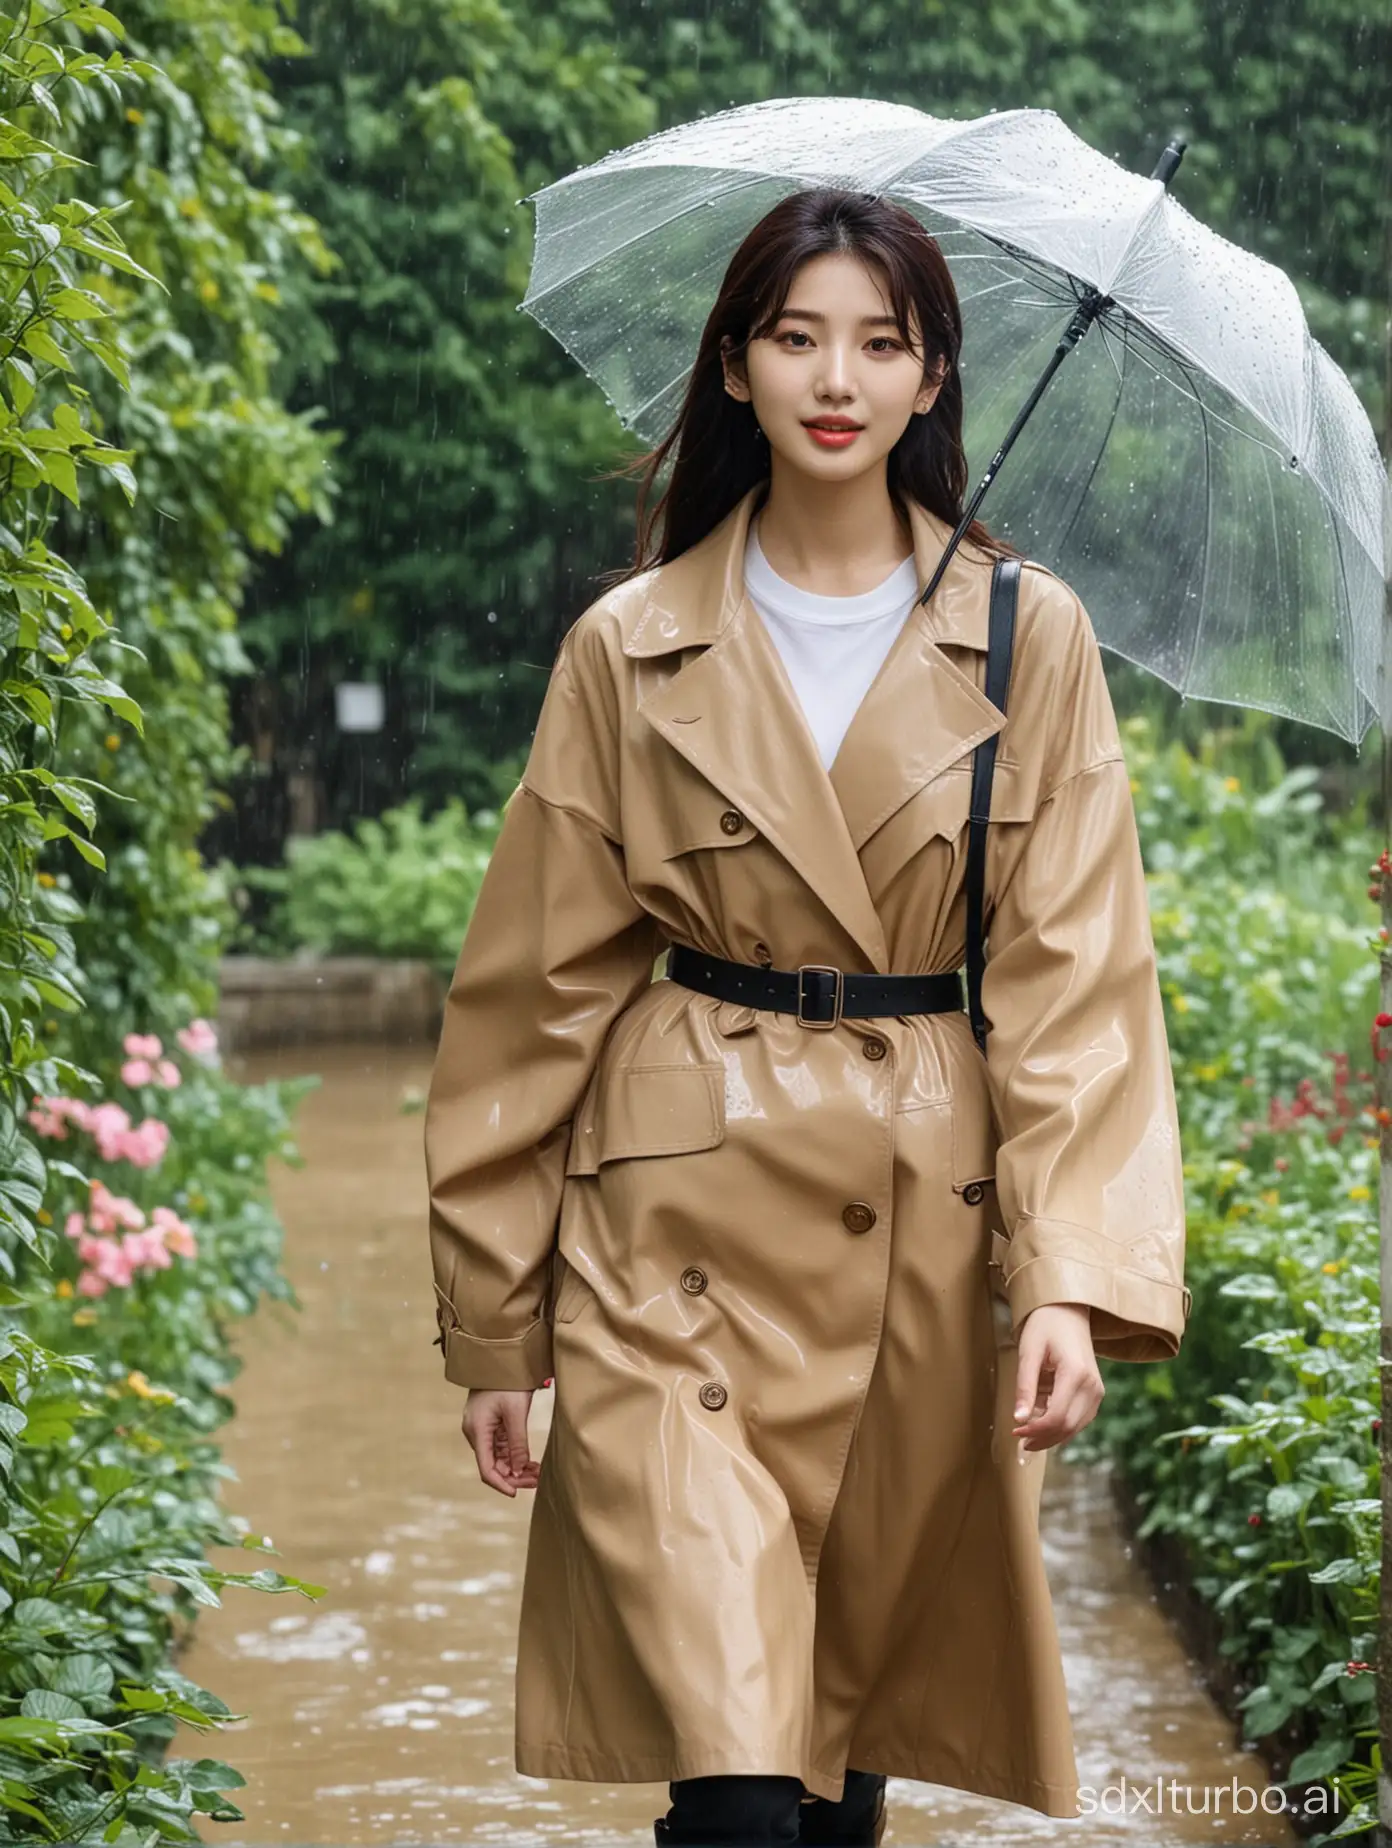 Elegant-Bae-Suzy-Strolling-Amidst-Rainy-Garden-Serenity